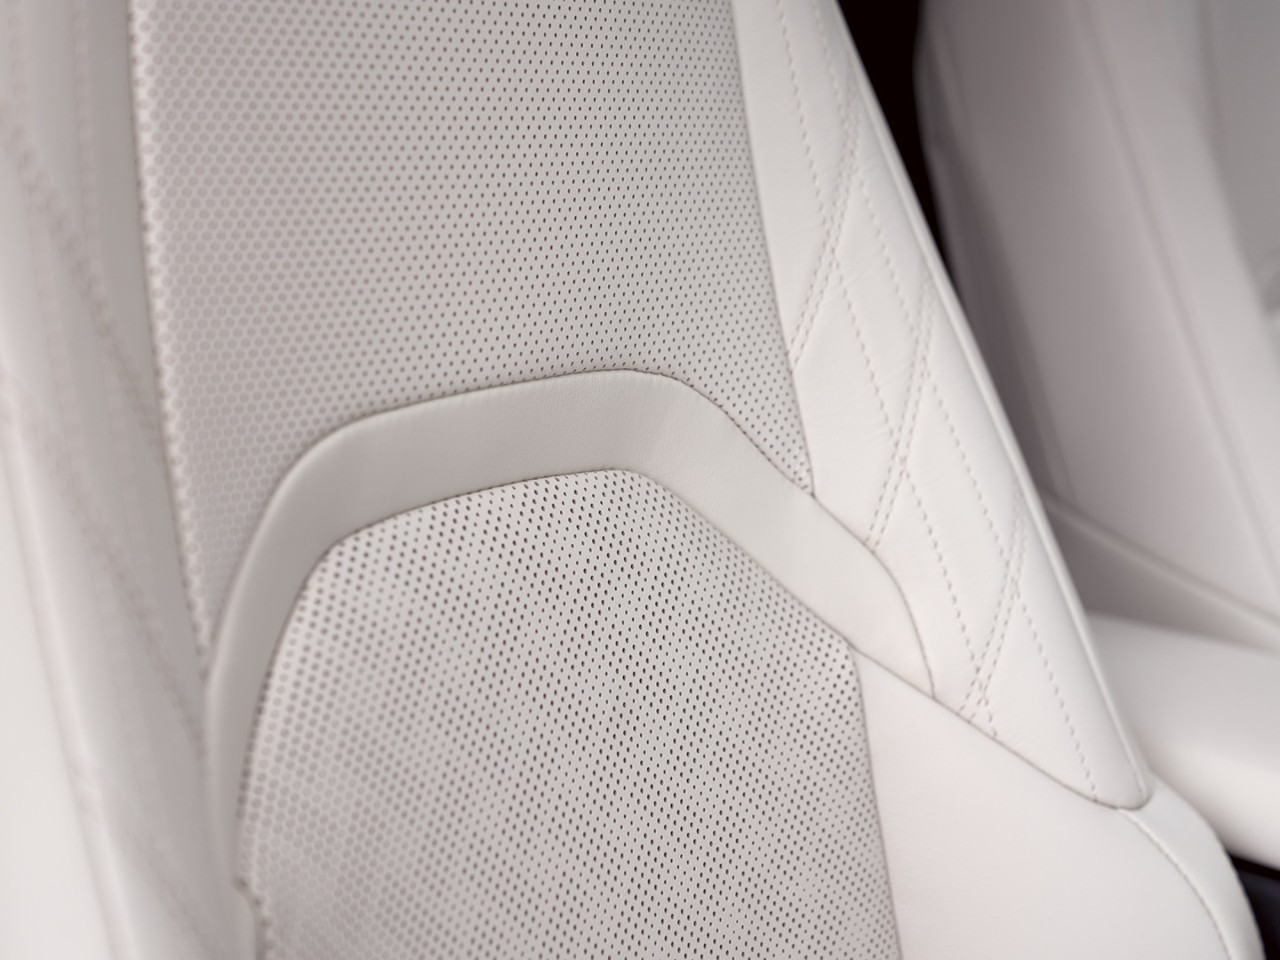 Lexus UX 300e Sashiko leather upholstery